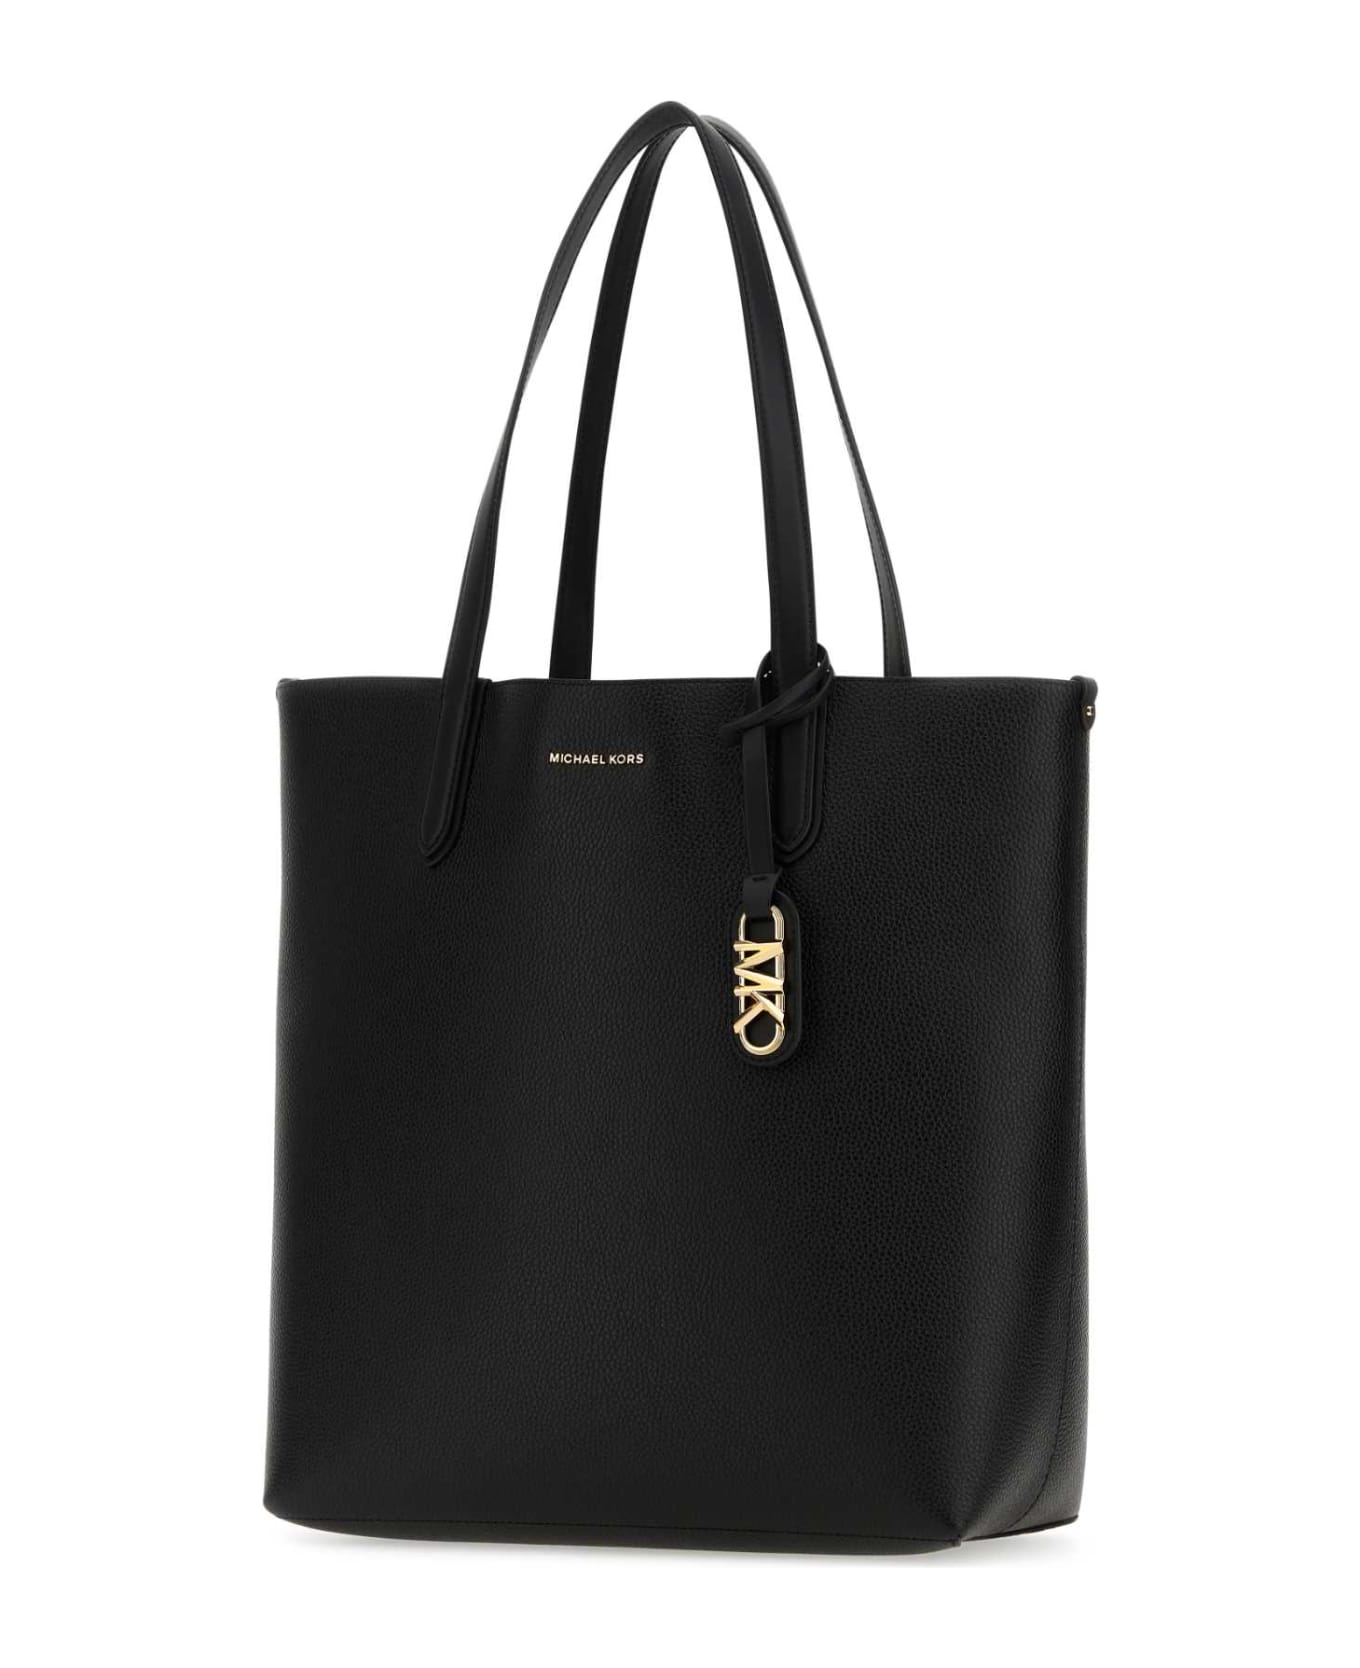 Michael Kors Black Leather Large Eliza Shopping Bag - Black